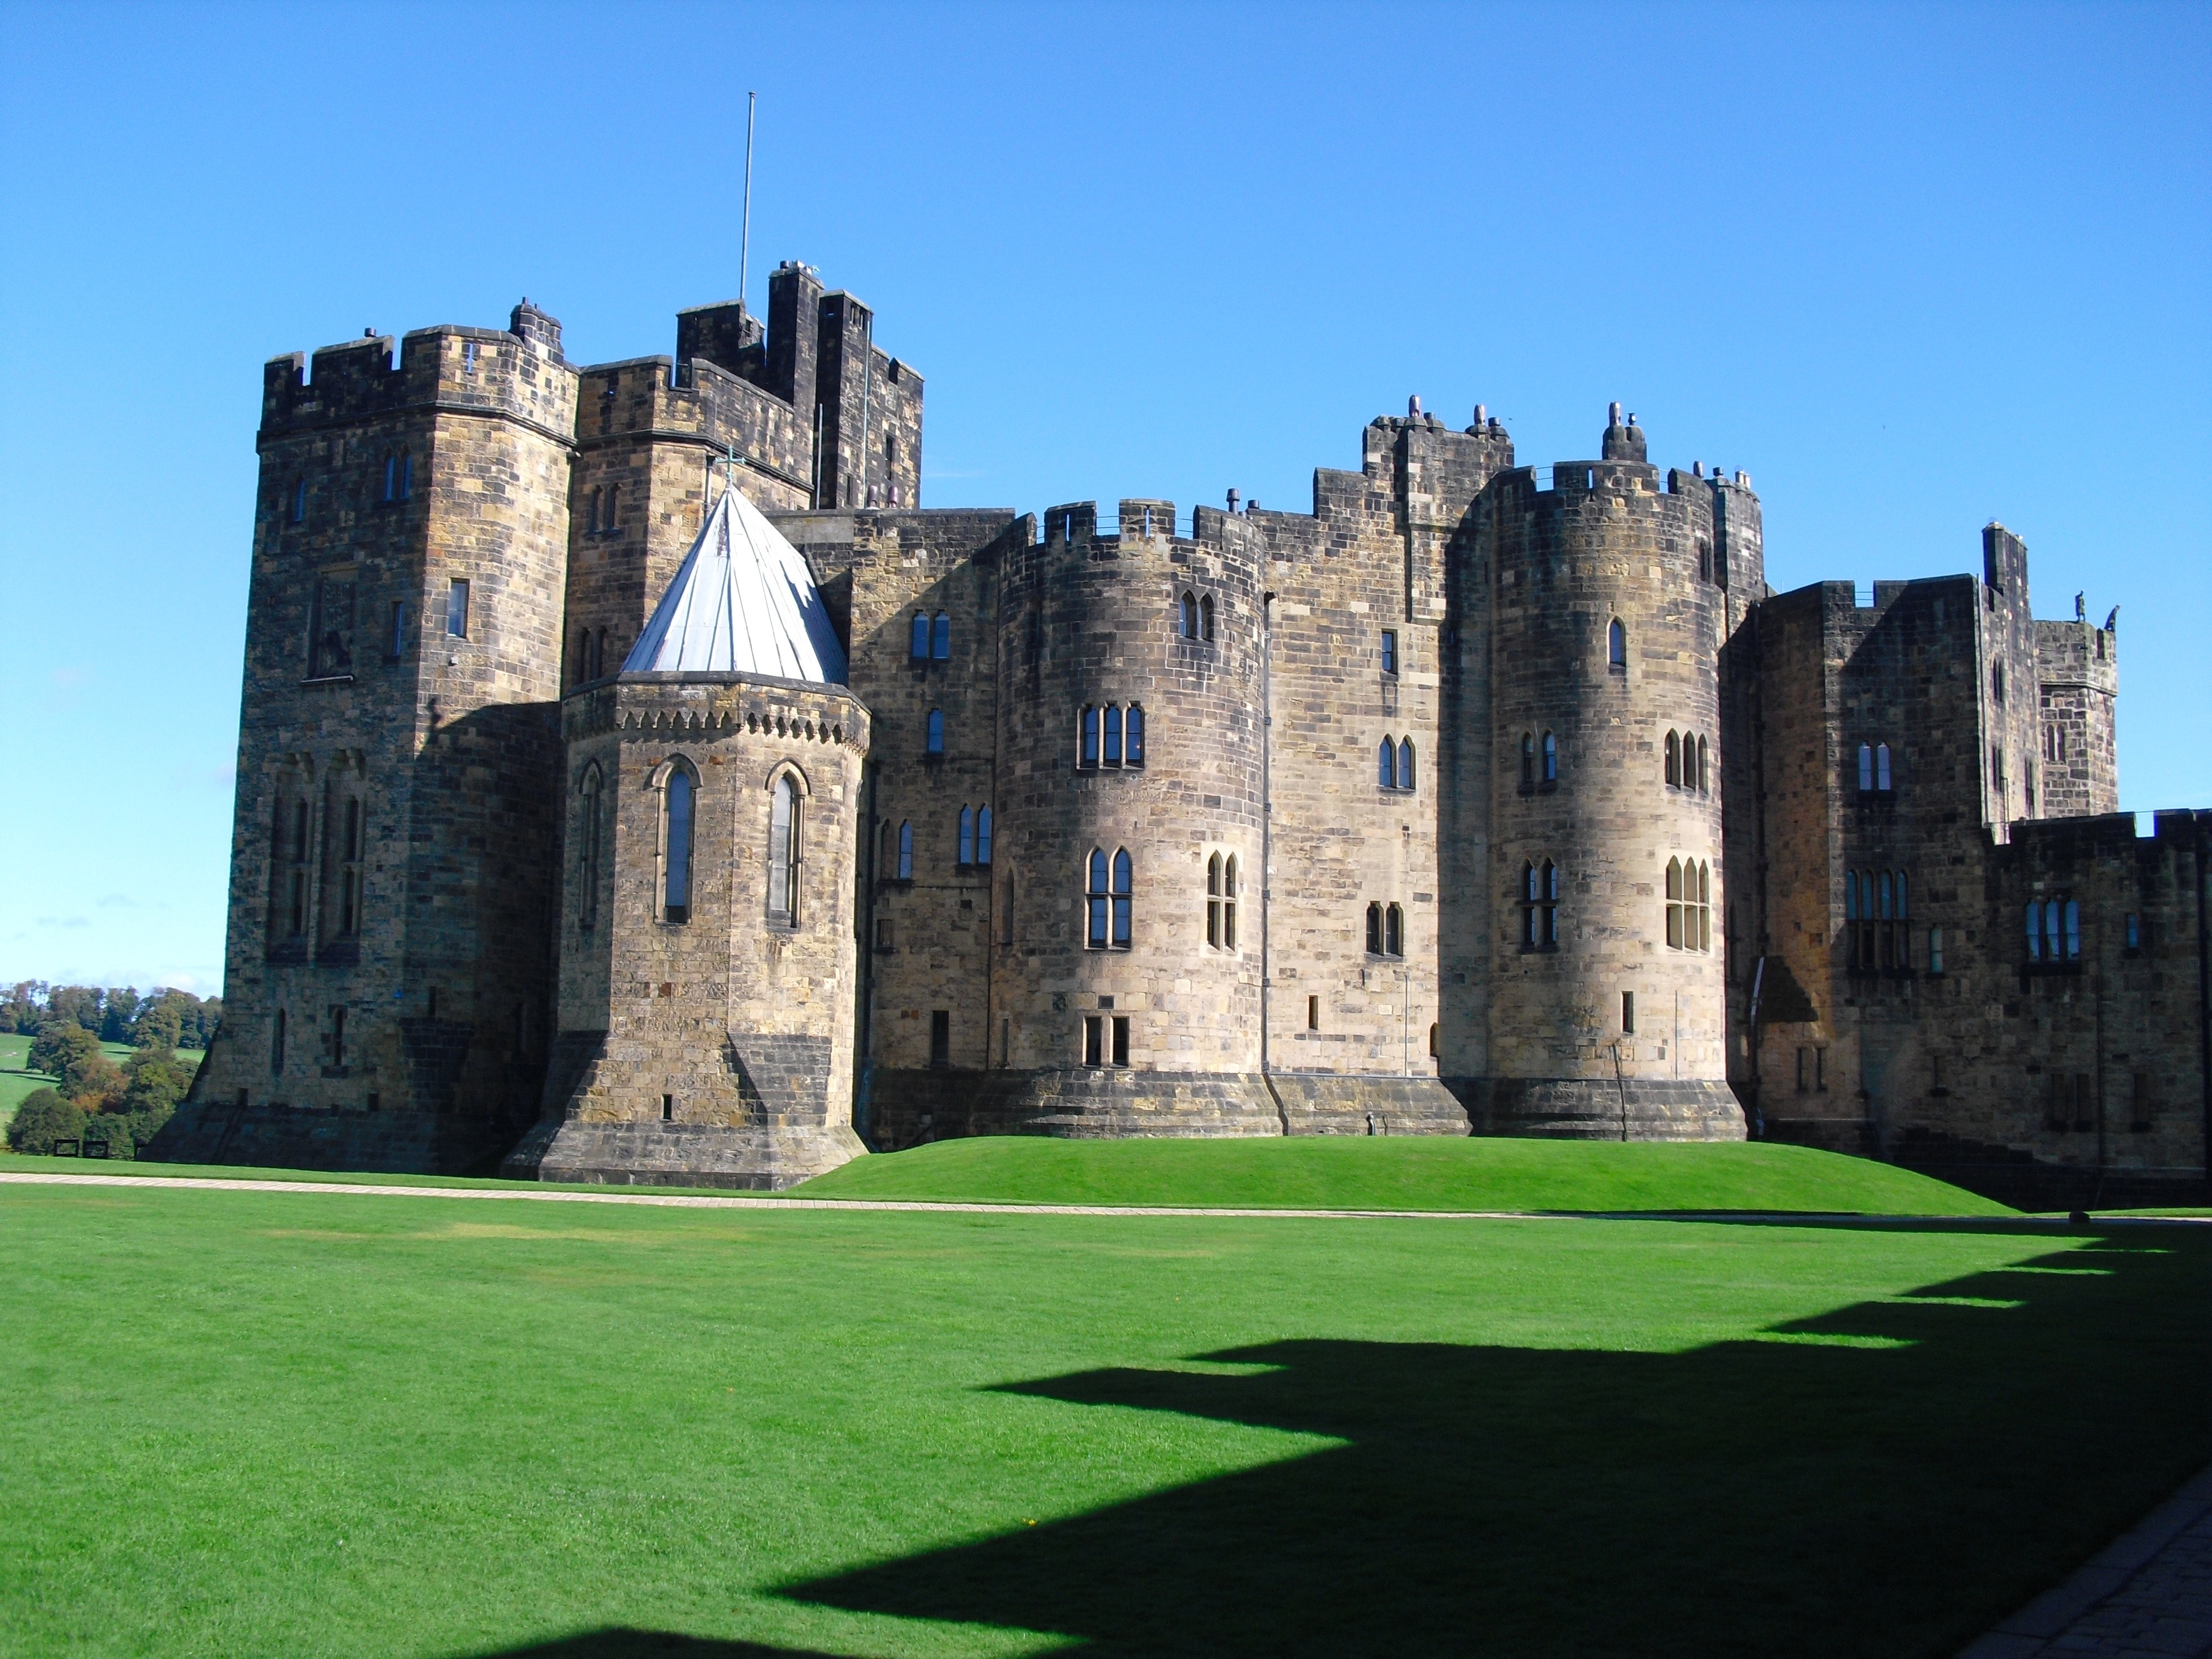 Free stock photos of castle · Pexels